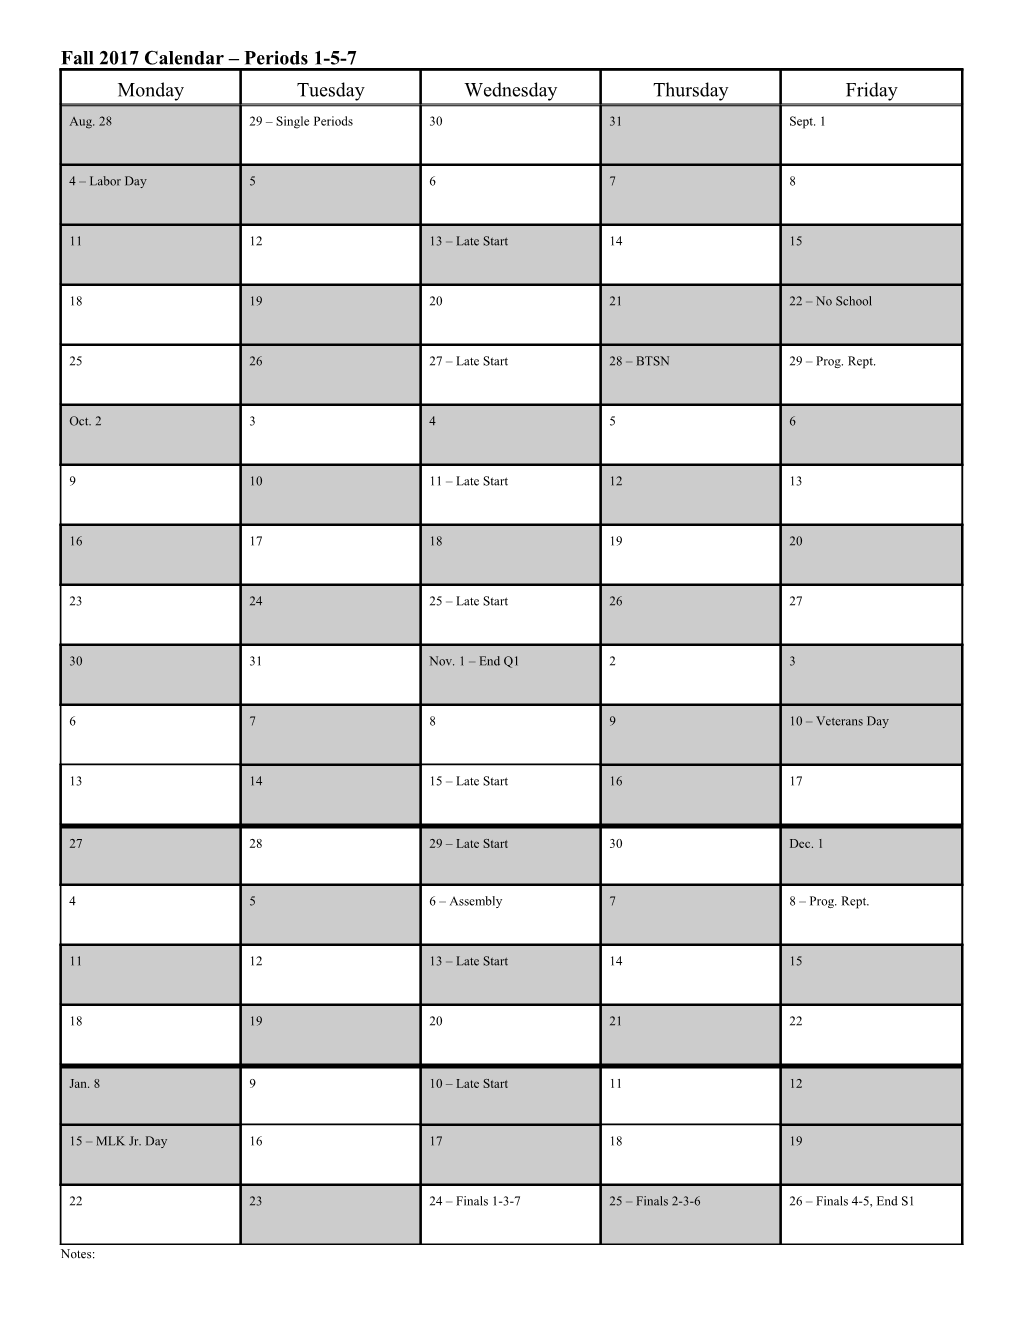 Fall 2006 - Calendar - Periods 1-3-5